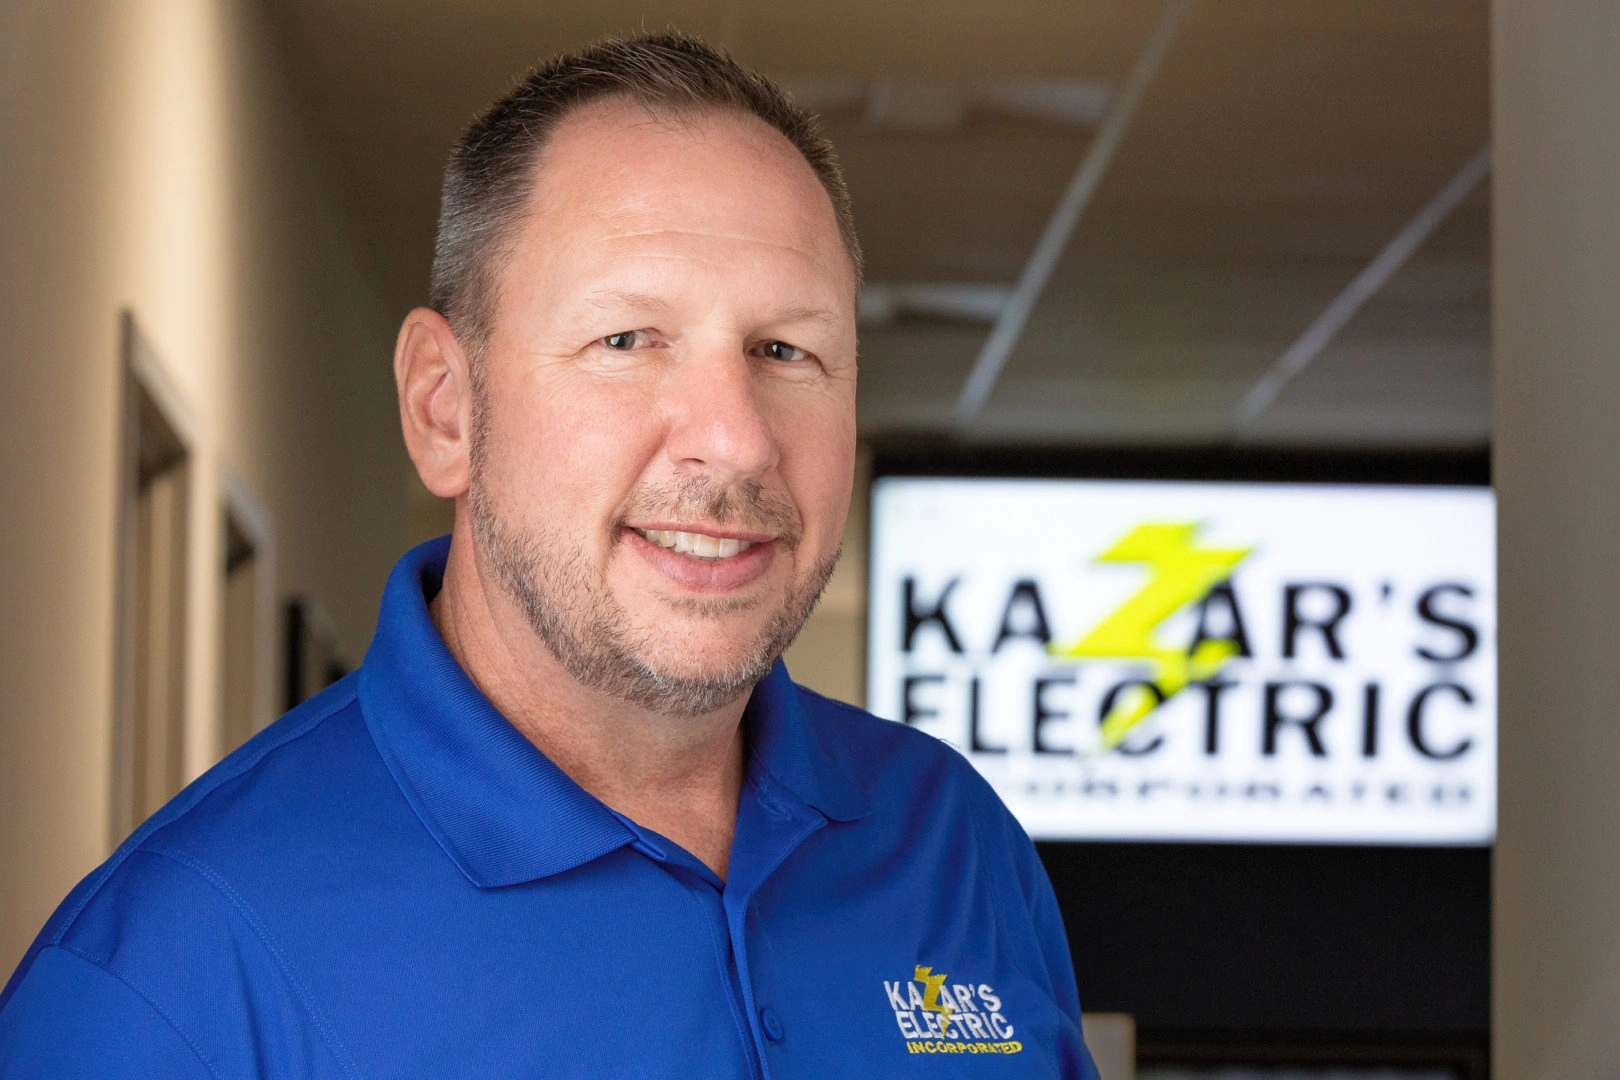 Kazar's Electric Inc Logo